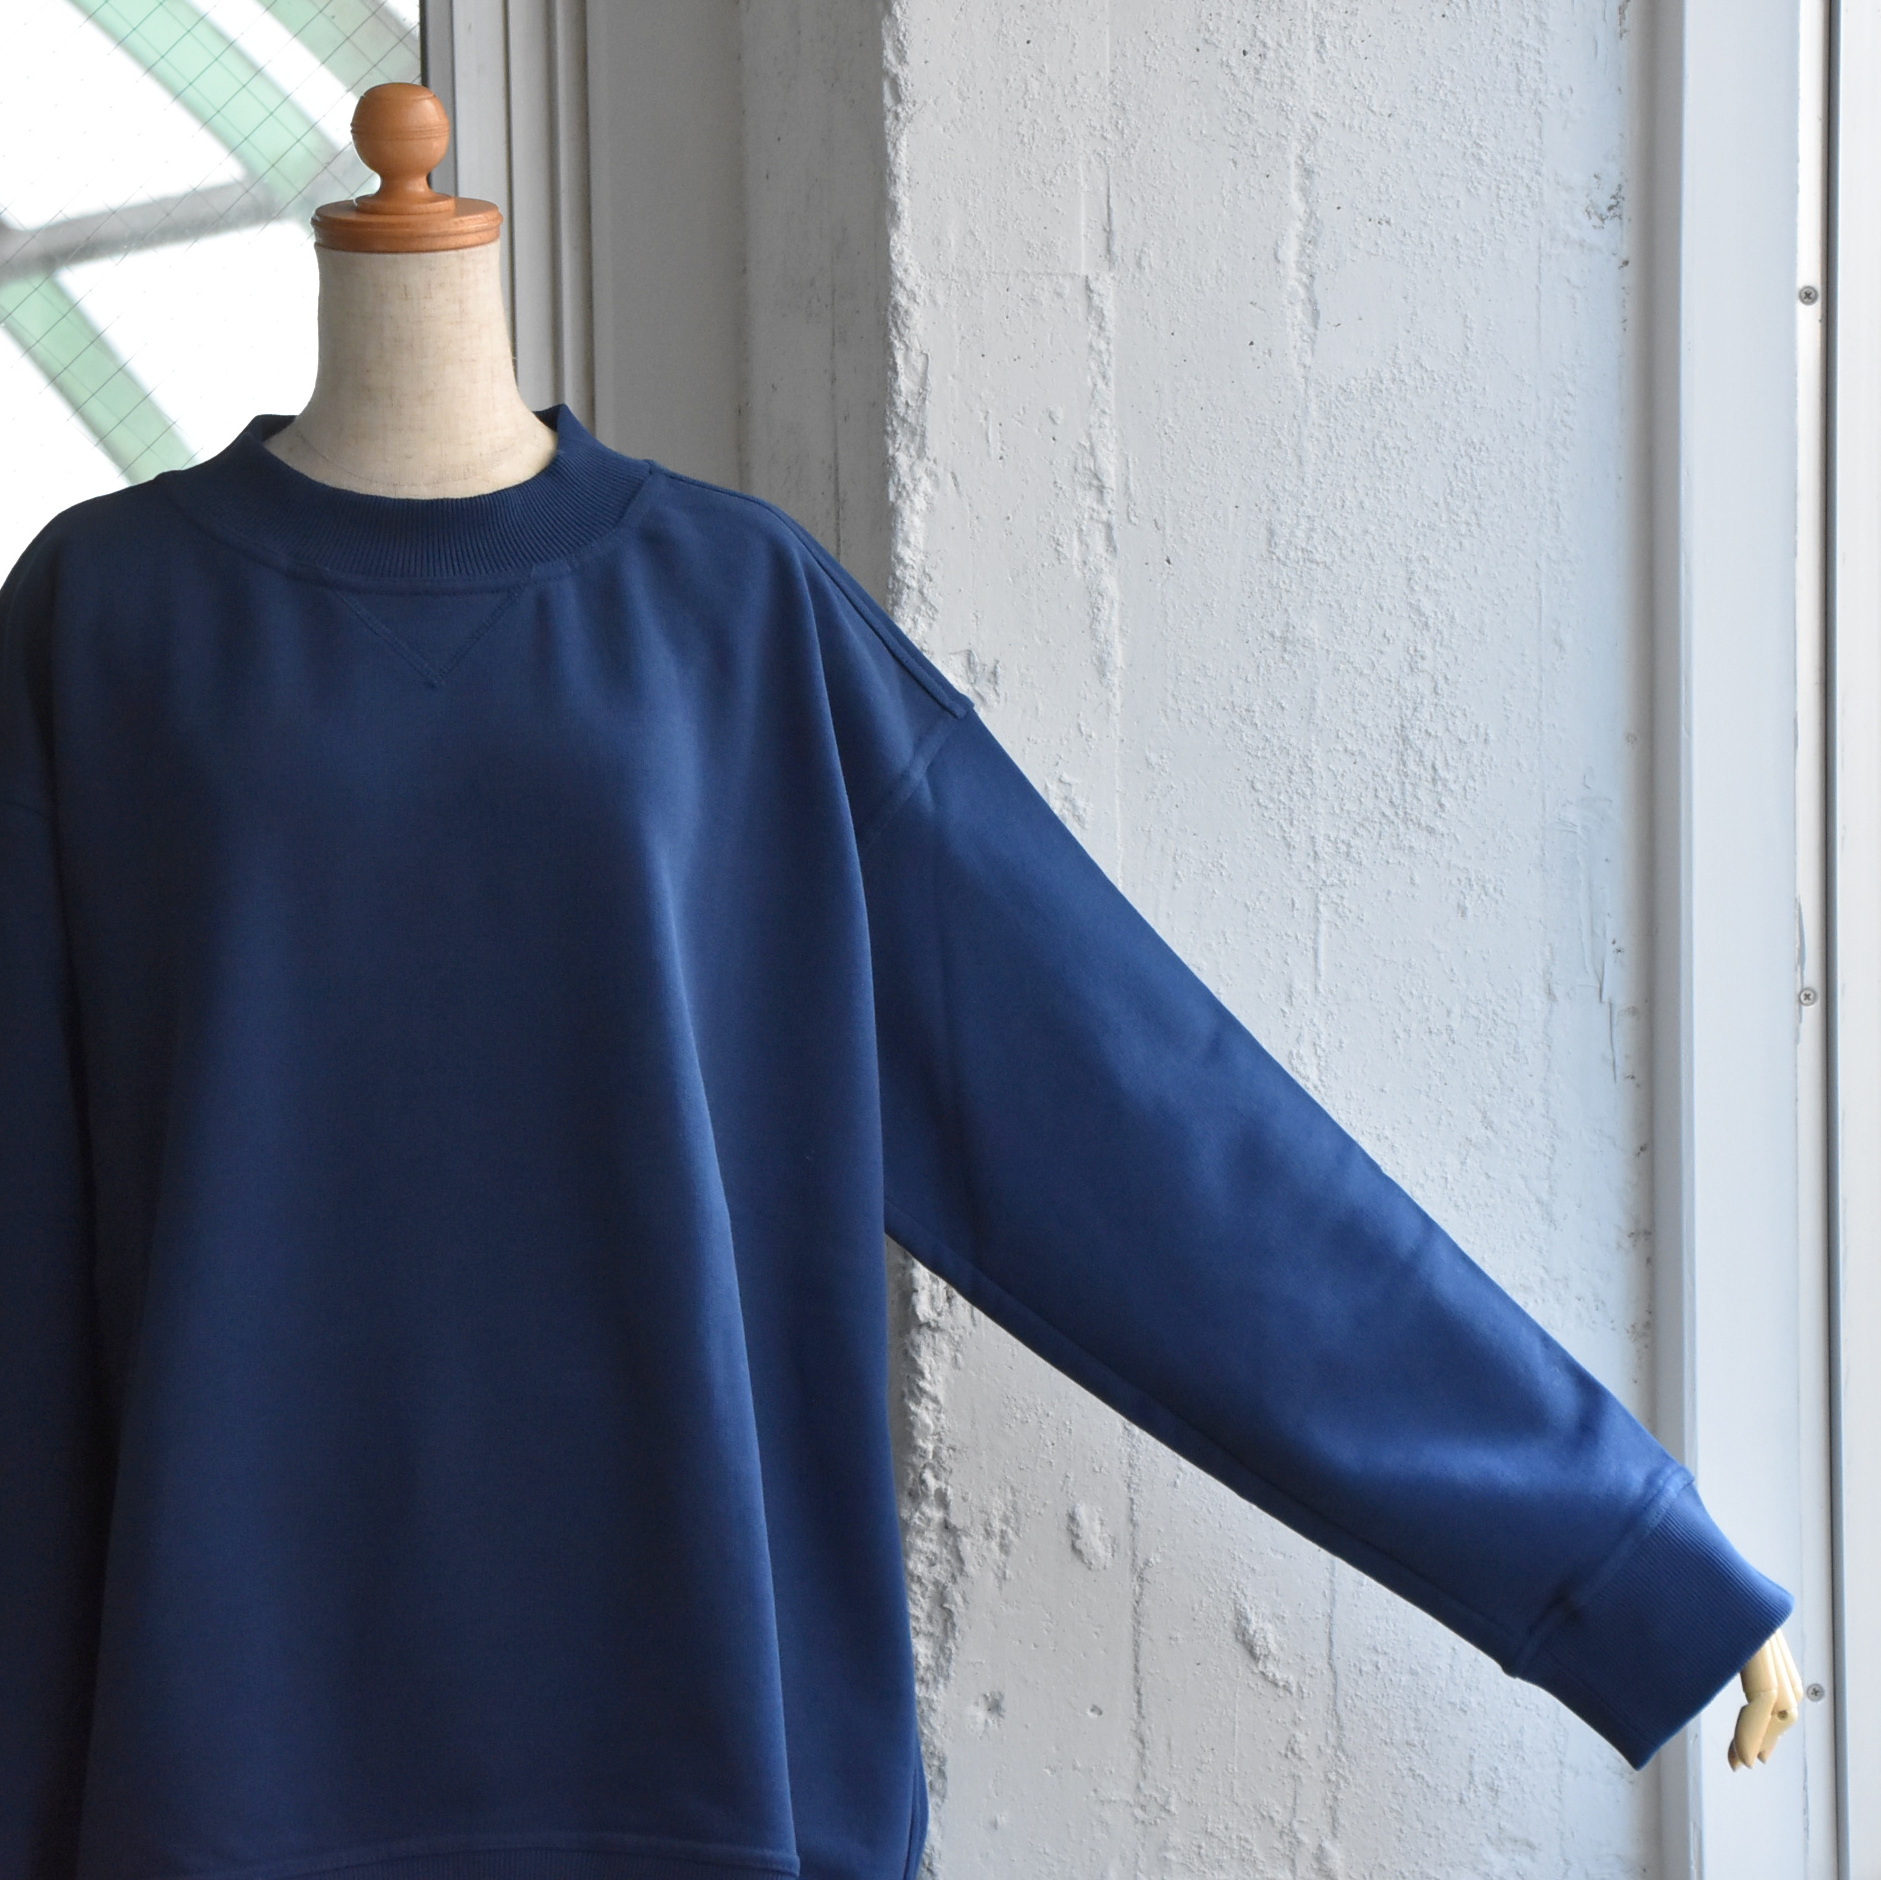 y40% off salezSOFIE D'HOORE(\tB[h[) / Long sleeve C-neck sweatshirt with top stichy2FWJz #TASTE-AA(10)